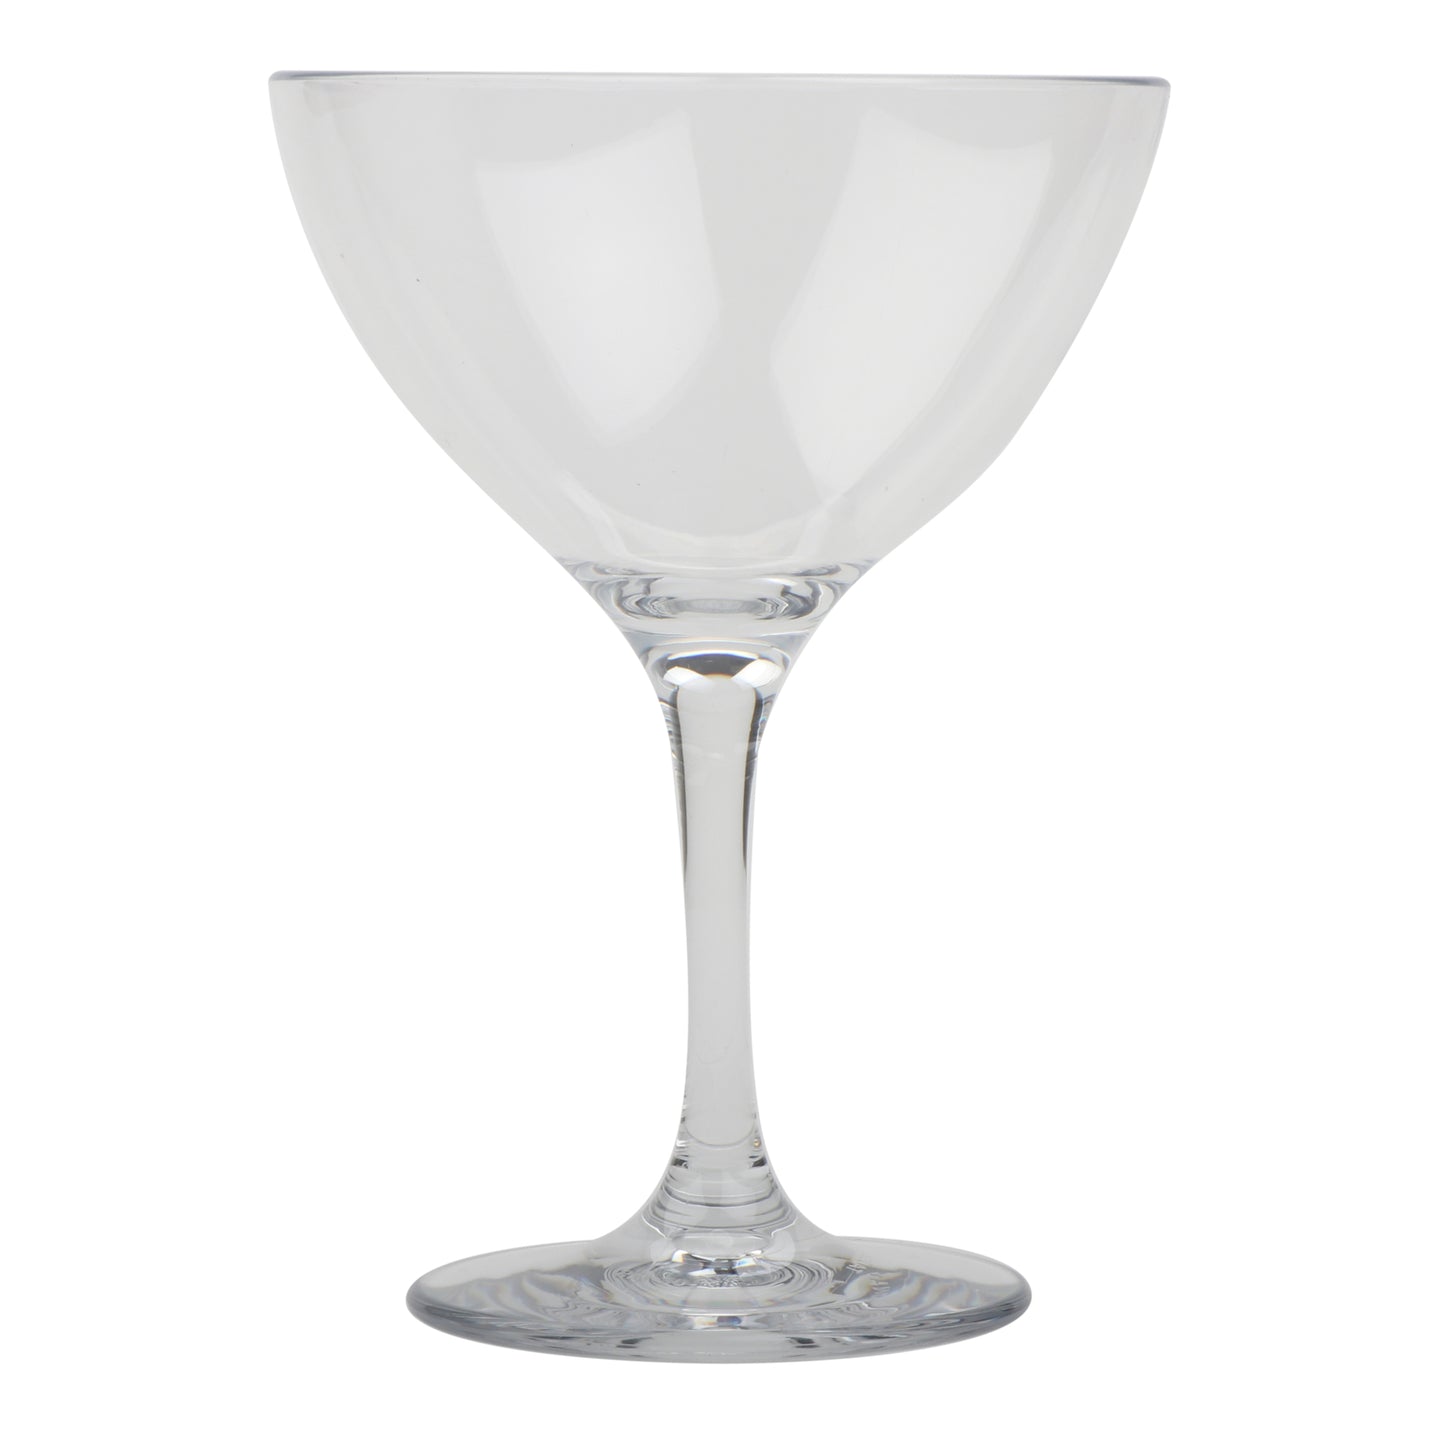 6 oz. Tritan, Clear, Martini/Cocktail Glass, (9 oz. rim-full), 3.96" Top Dia., 5.45" Tall, GET. Social Club (12 Pack)